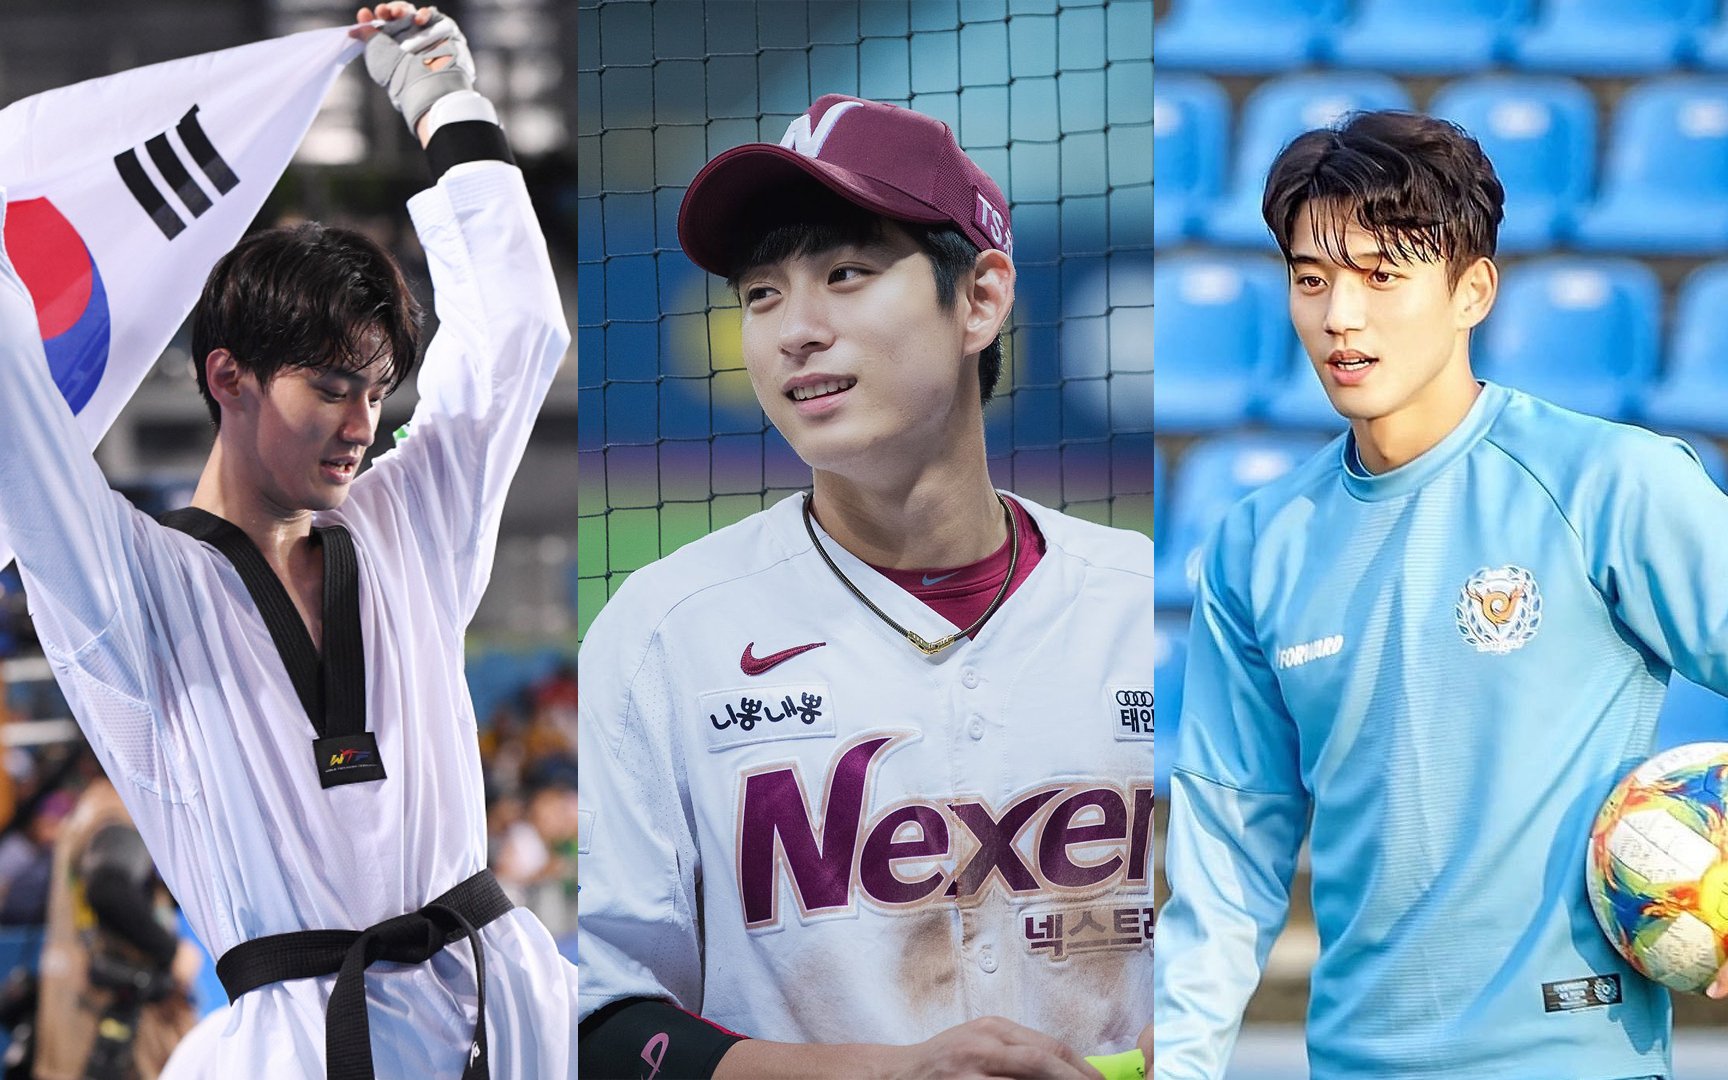 Lee jung hoo baseball